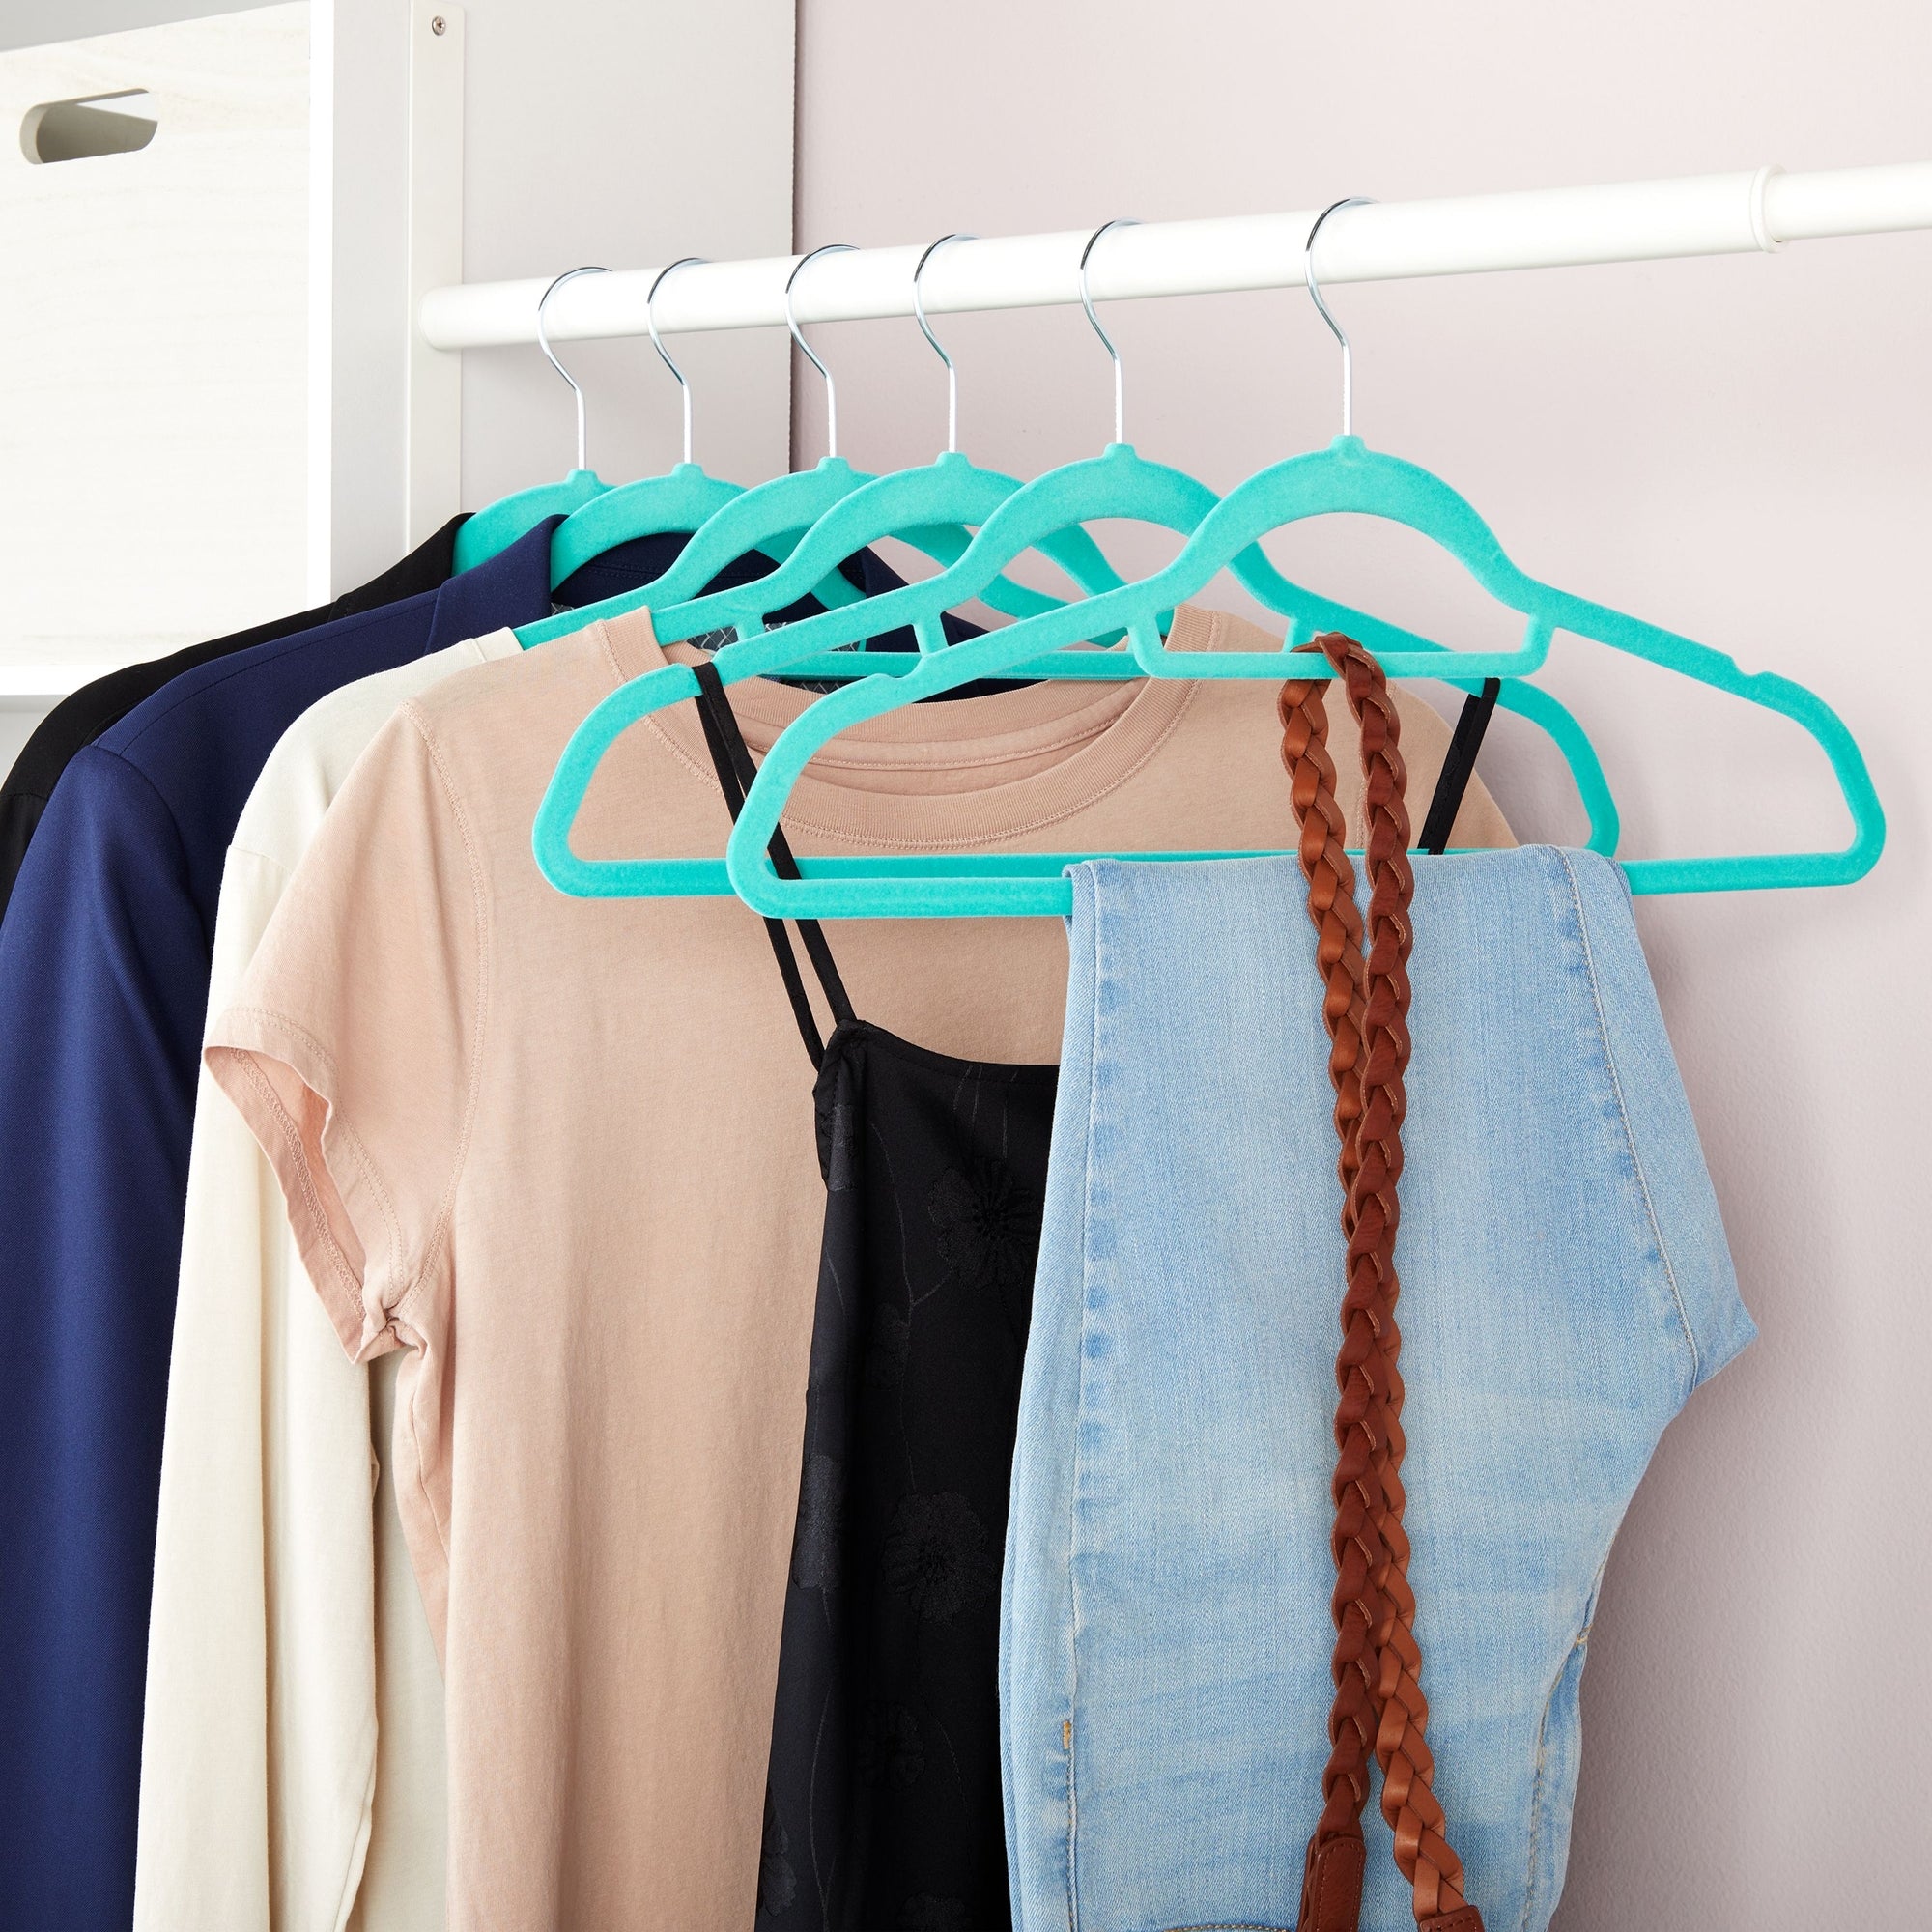 50 Pack Non Slip Velvet Clothes Hangers with Cascading Hooks Space